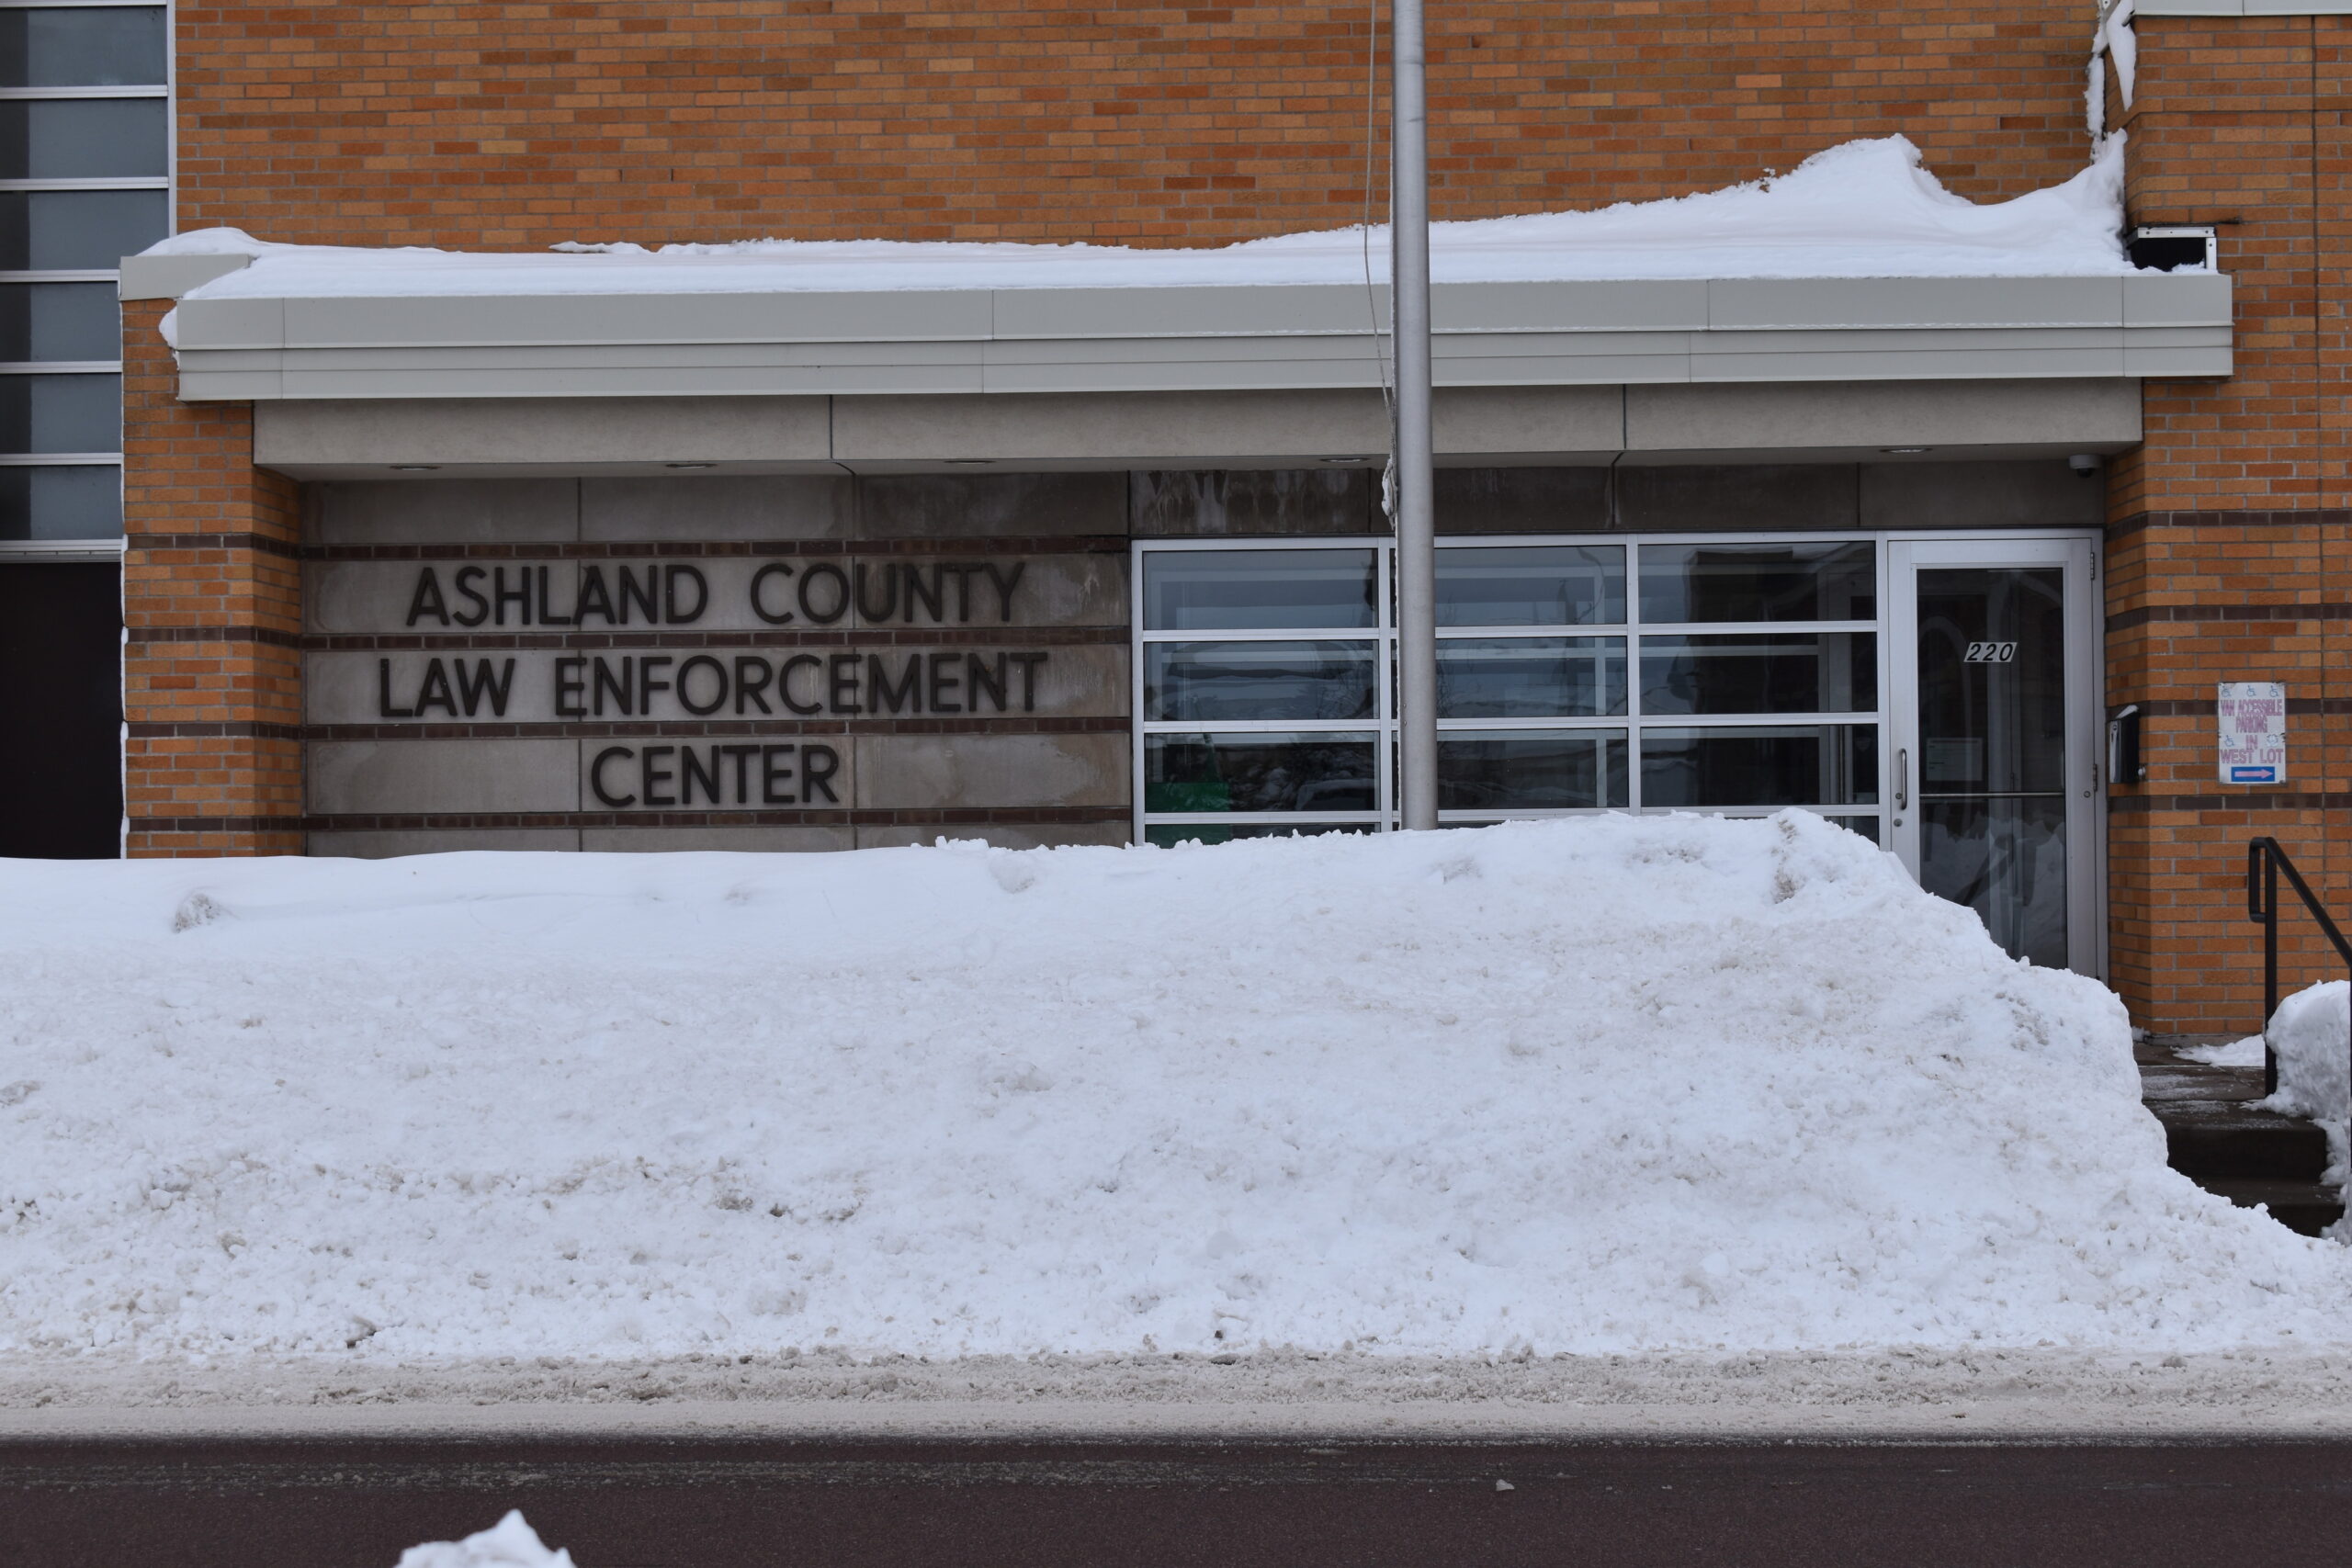 Ashland County Sheriff's Office